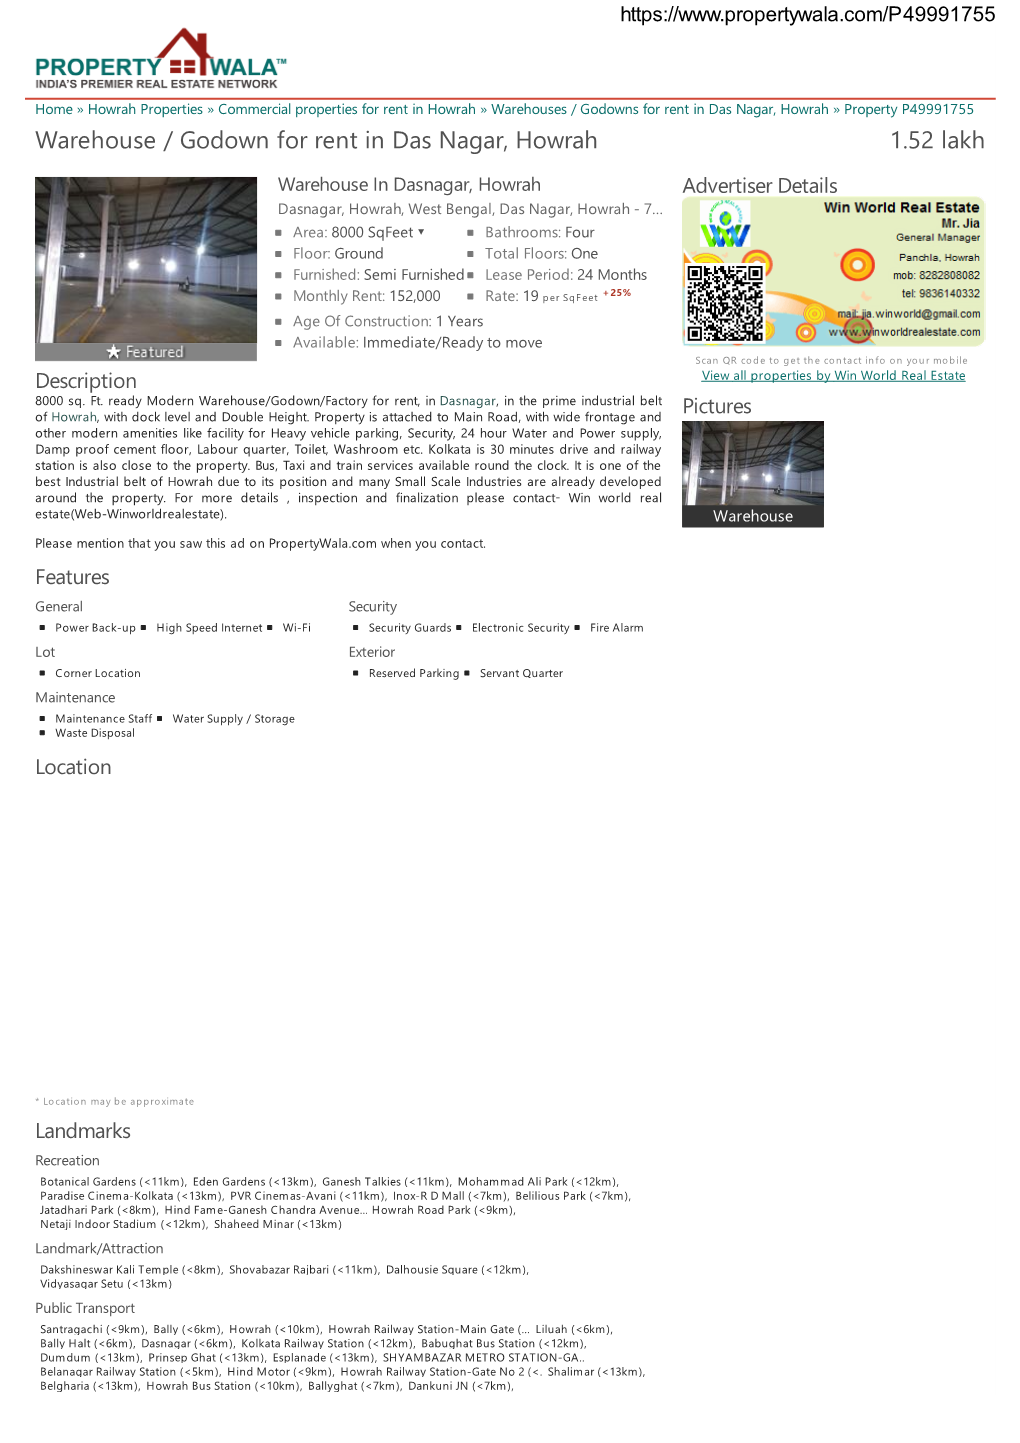 Warehouse / Godown for Rent in Das Nagar, Howrah (P49991755